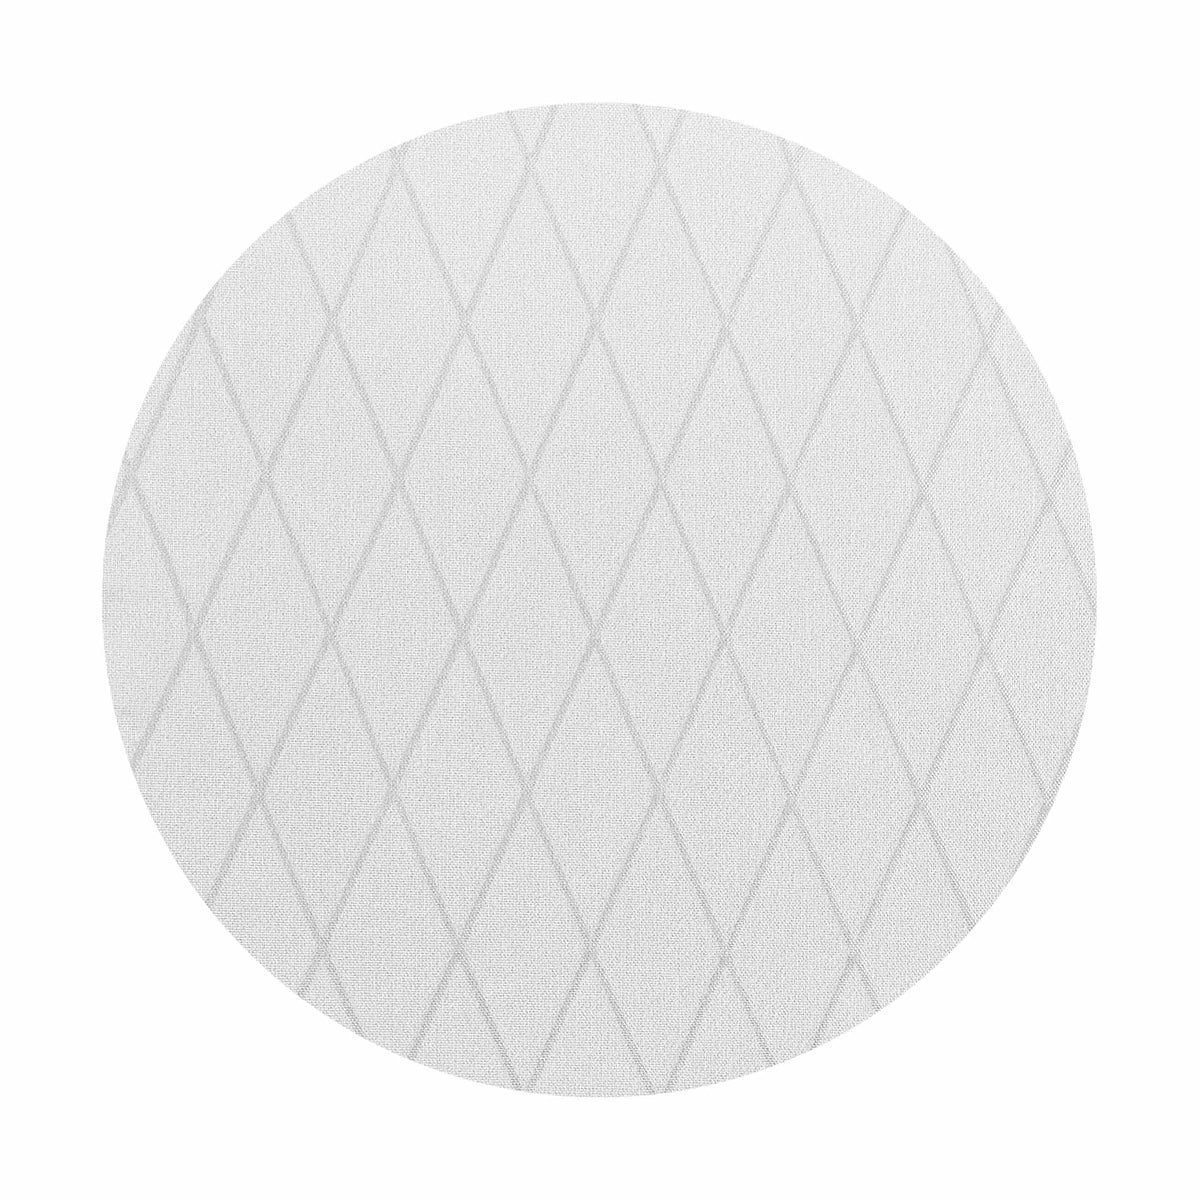 Velcro- fabric meterware textile color Velcro nature white